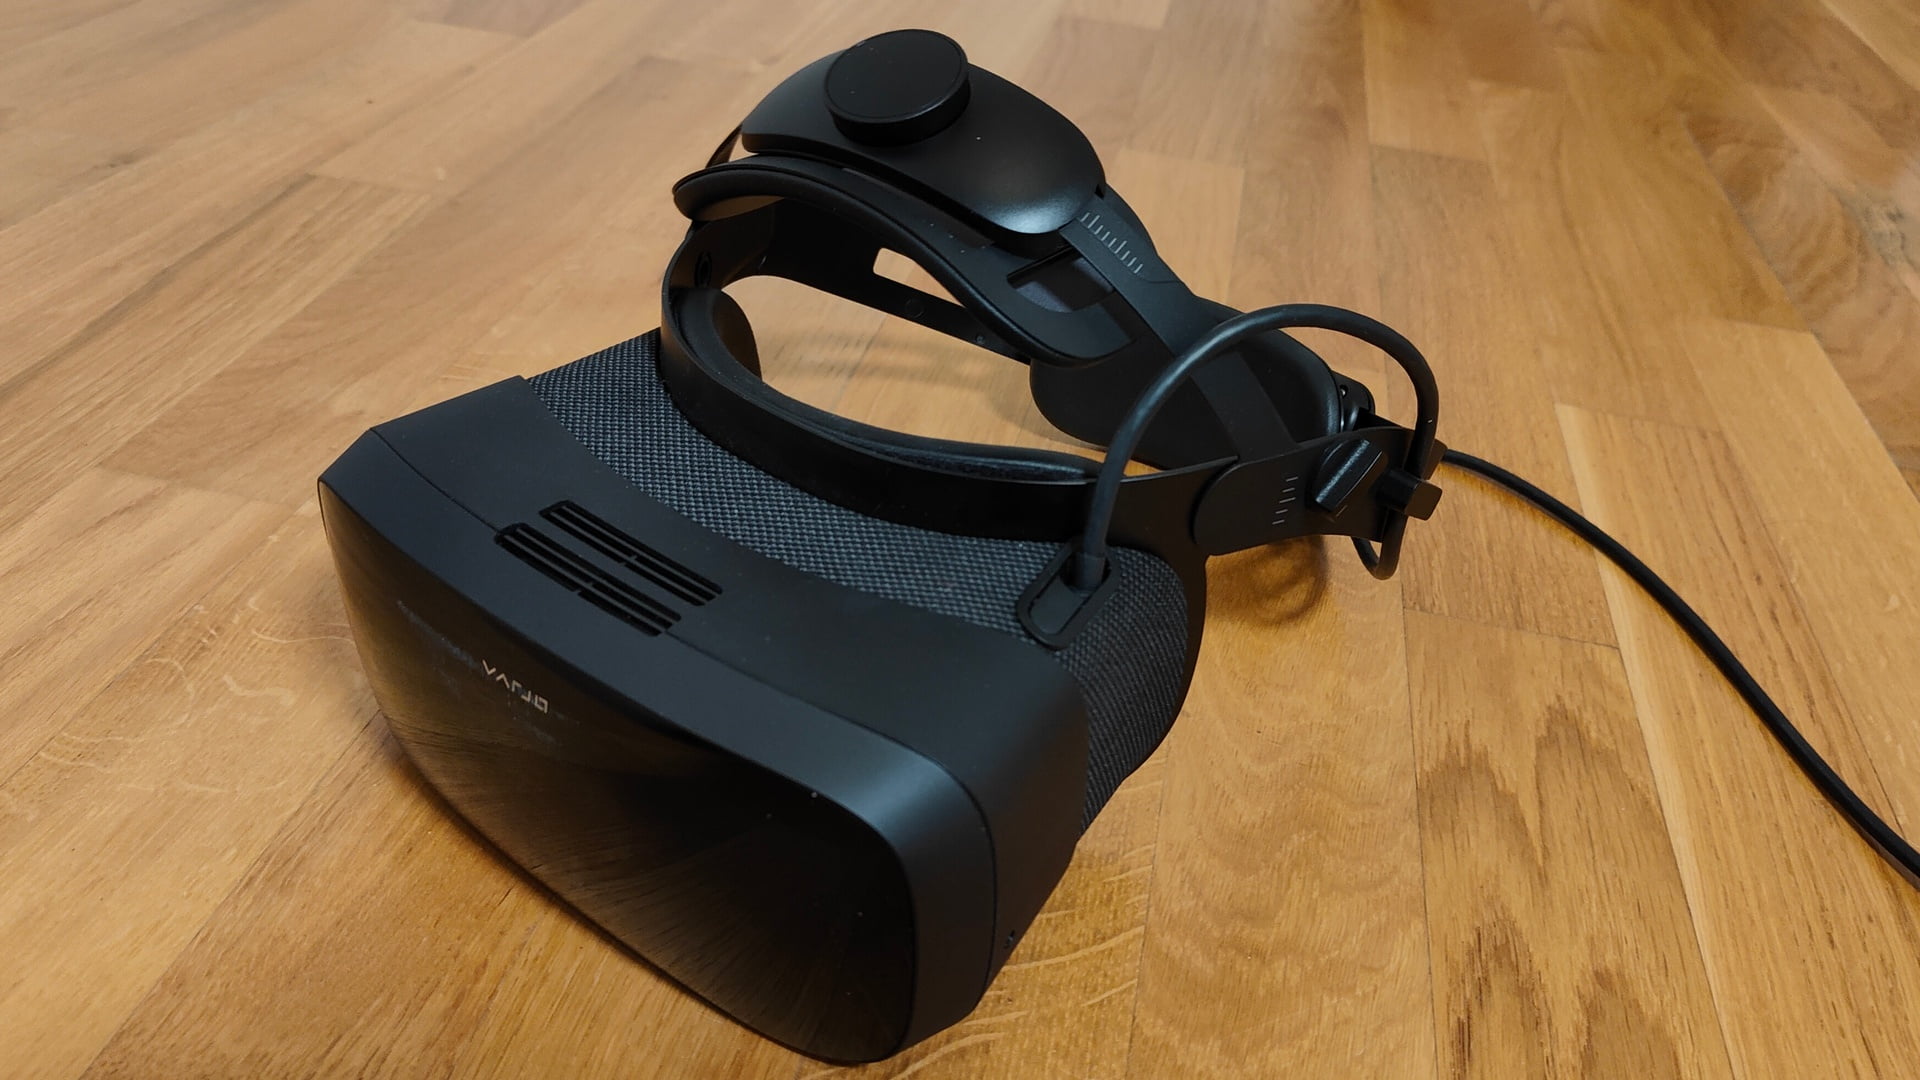 Varjo Aero review: Almost queen of virtual reality